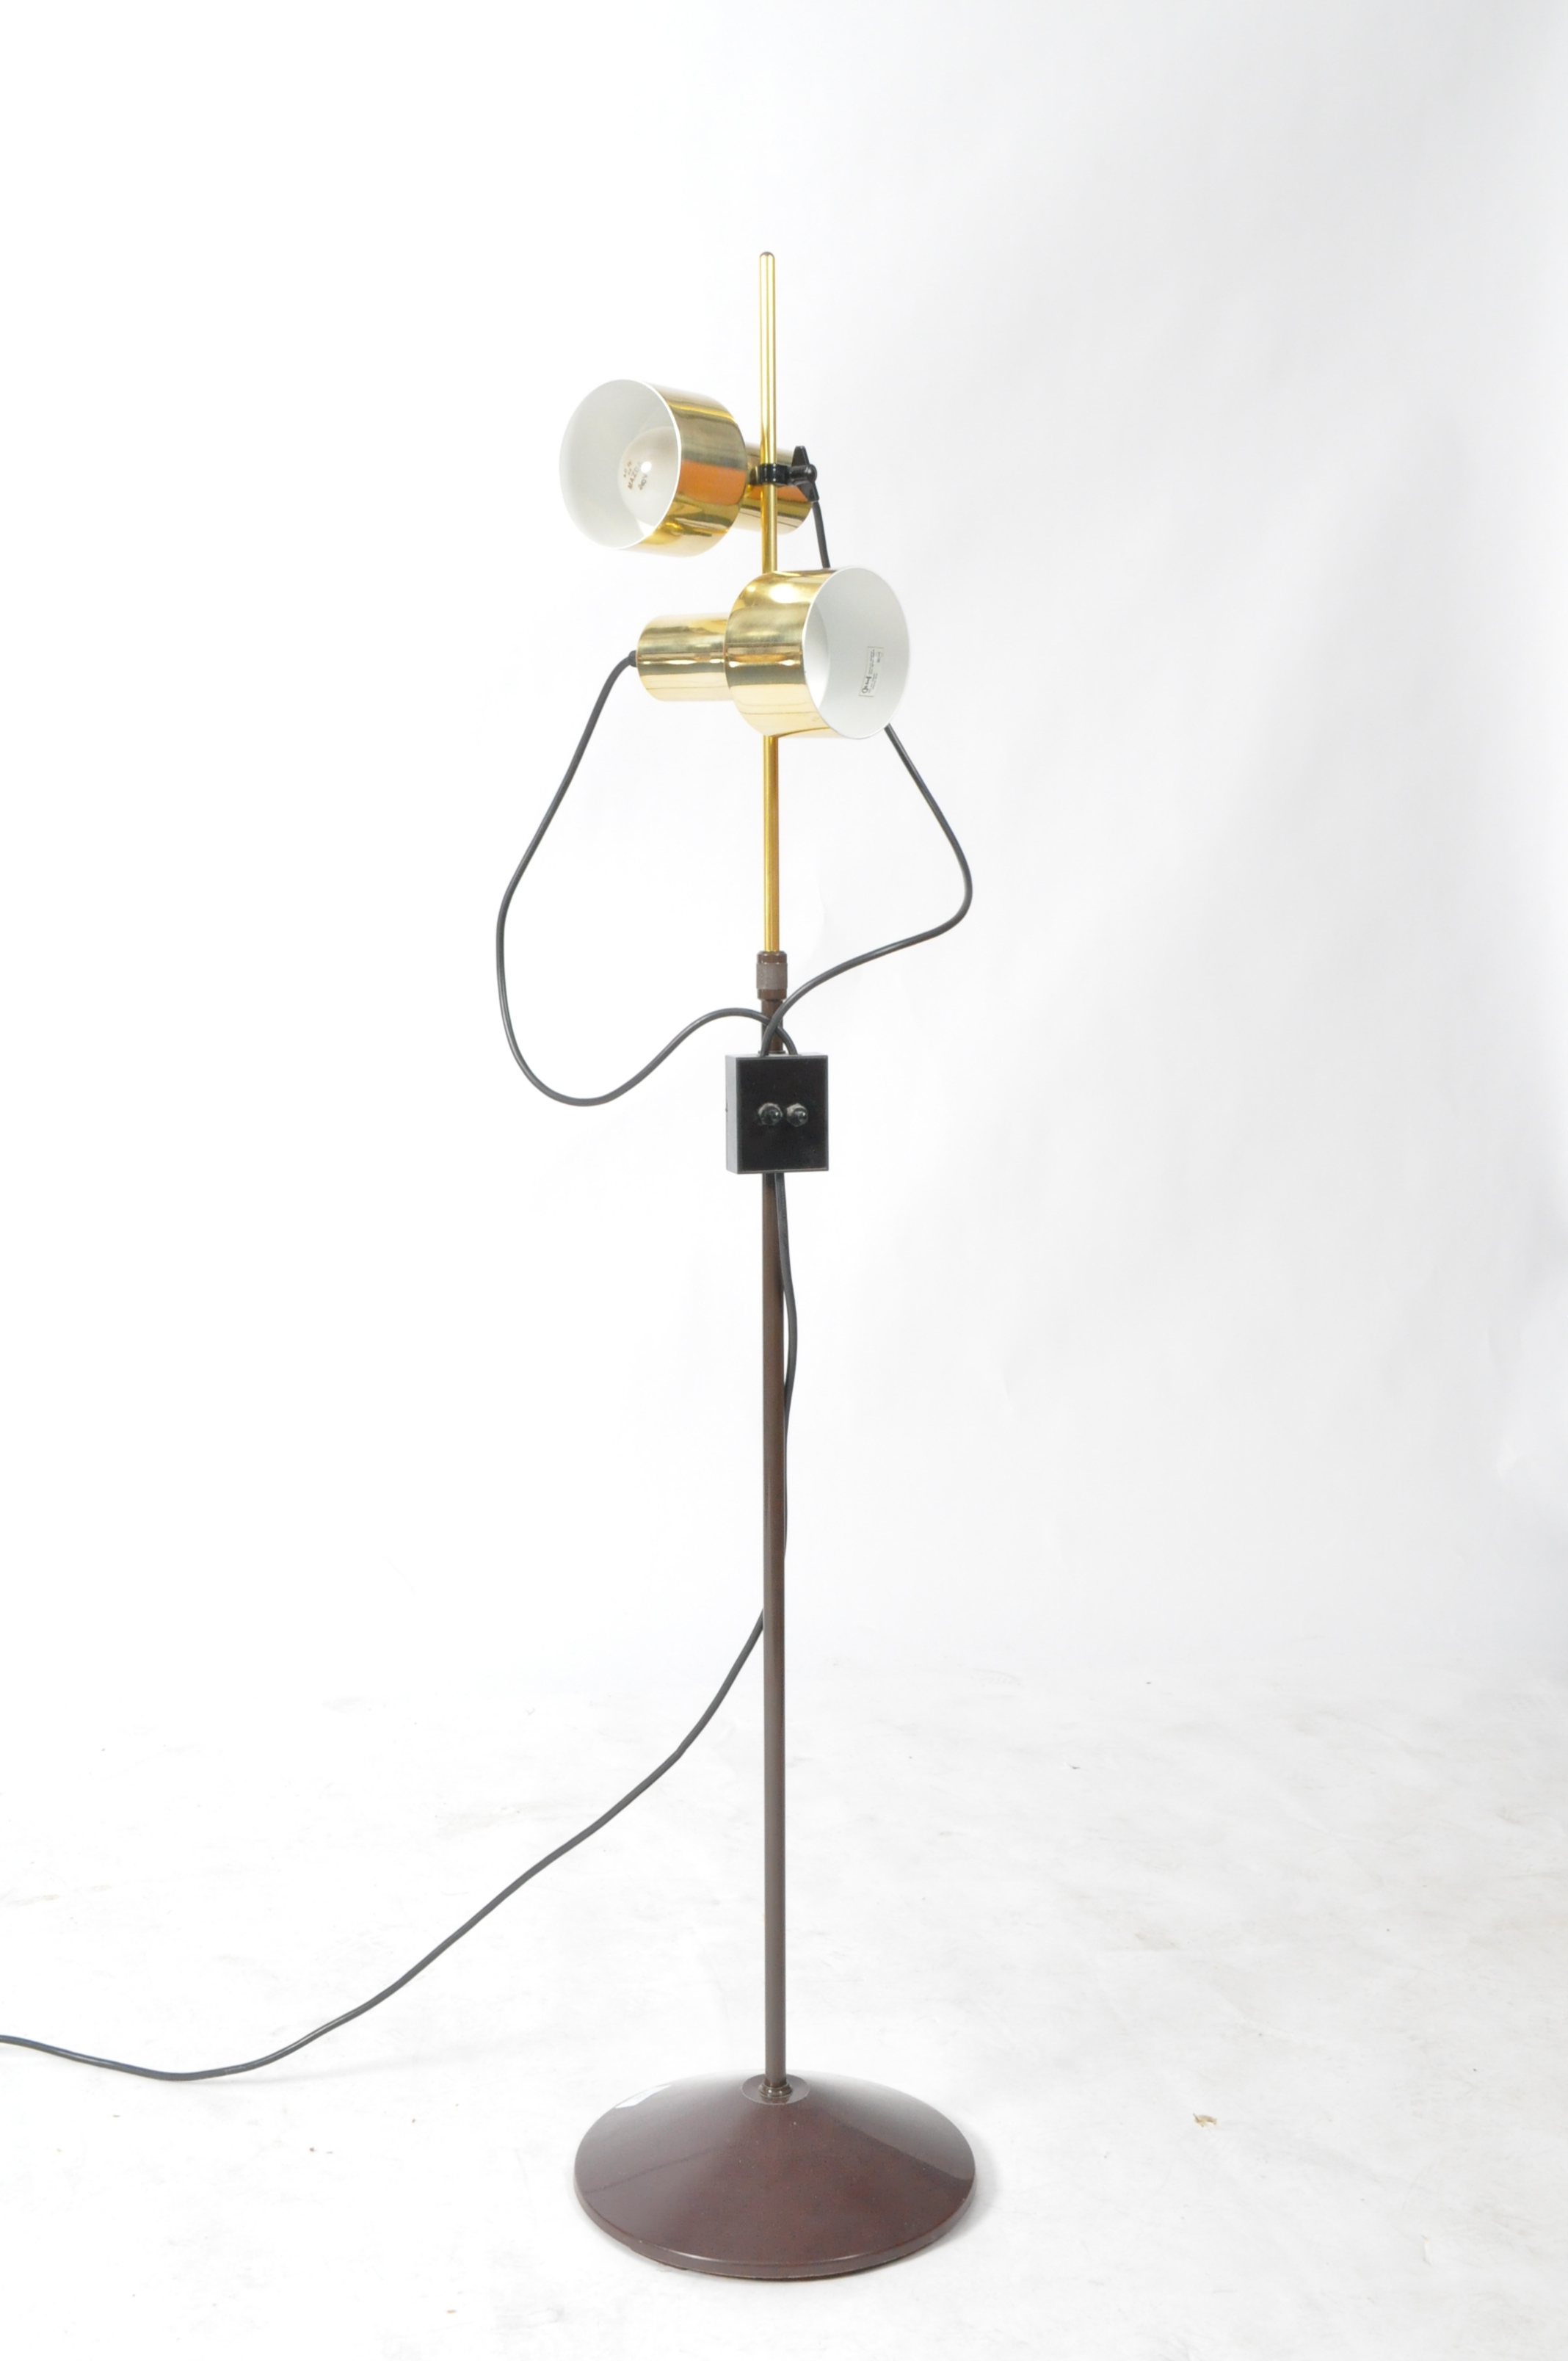 MID CENTURY ADJUSTABLE TWIN LIGHT FLOOR STANDING LAMP - Image 5 of 7